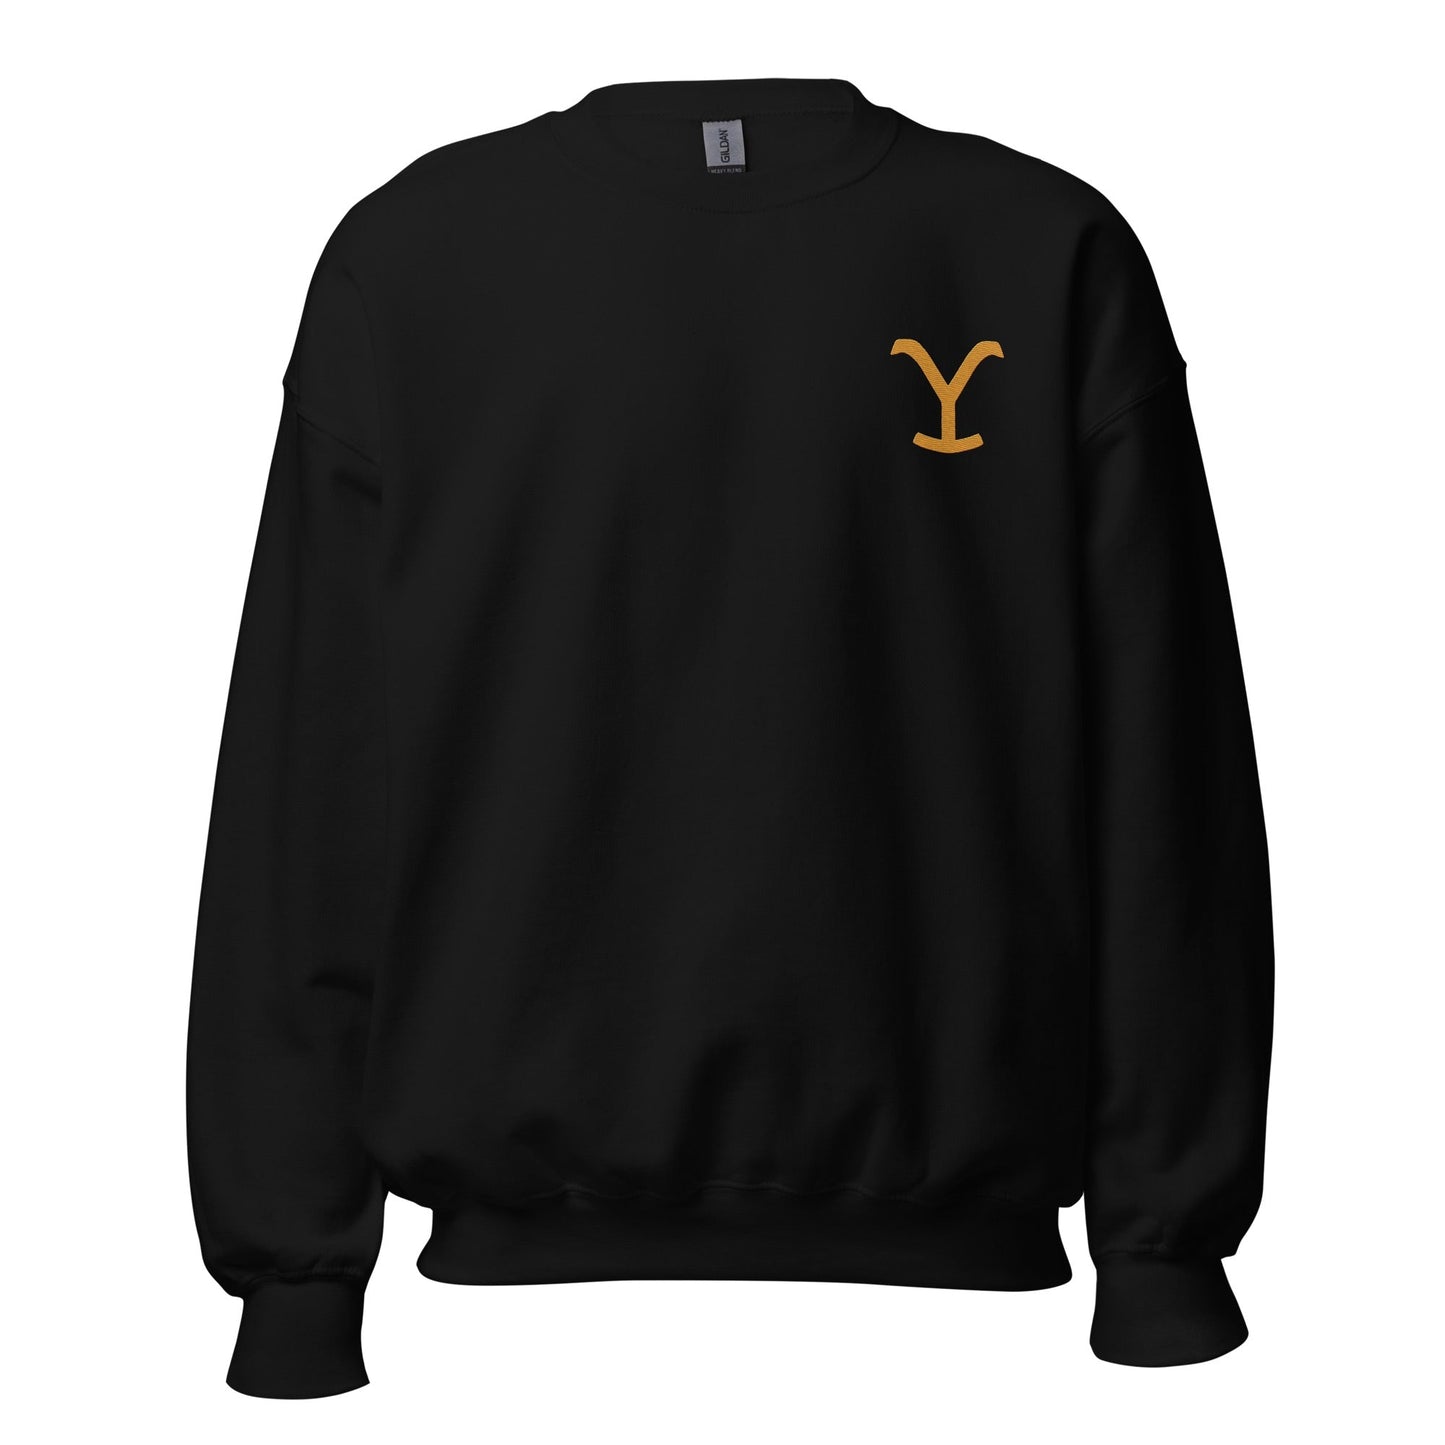 Yellowstone Y Embroidered Sweatshirt - Paramount Shop